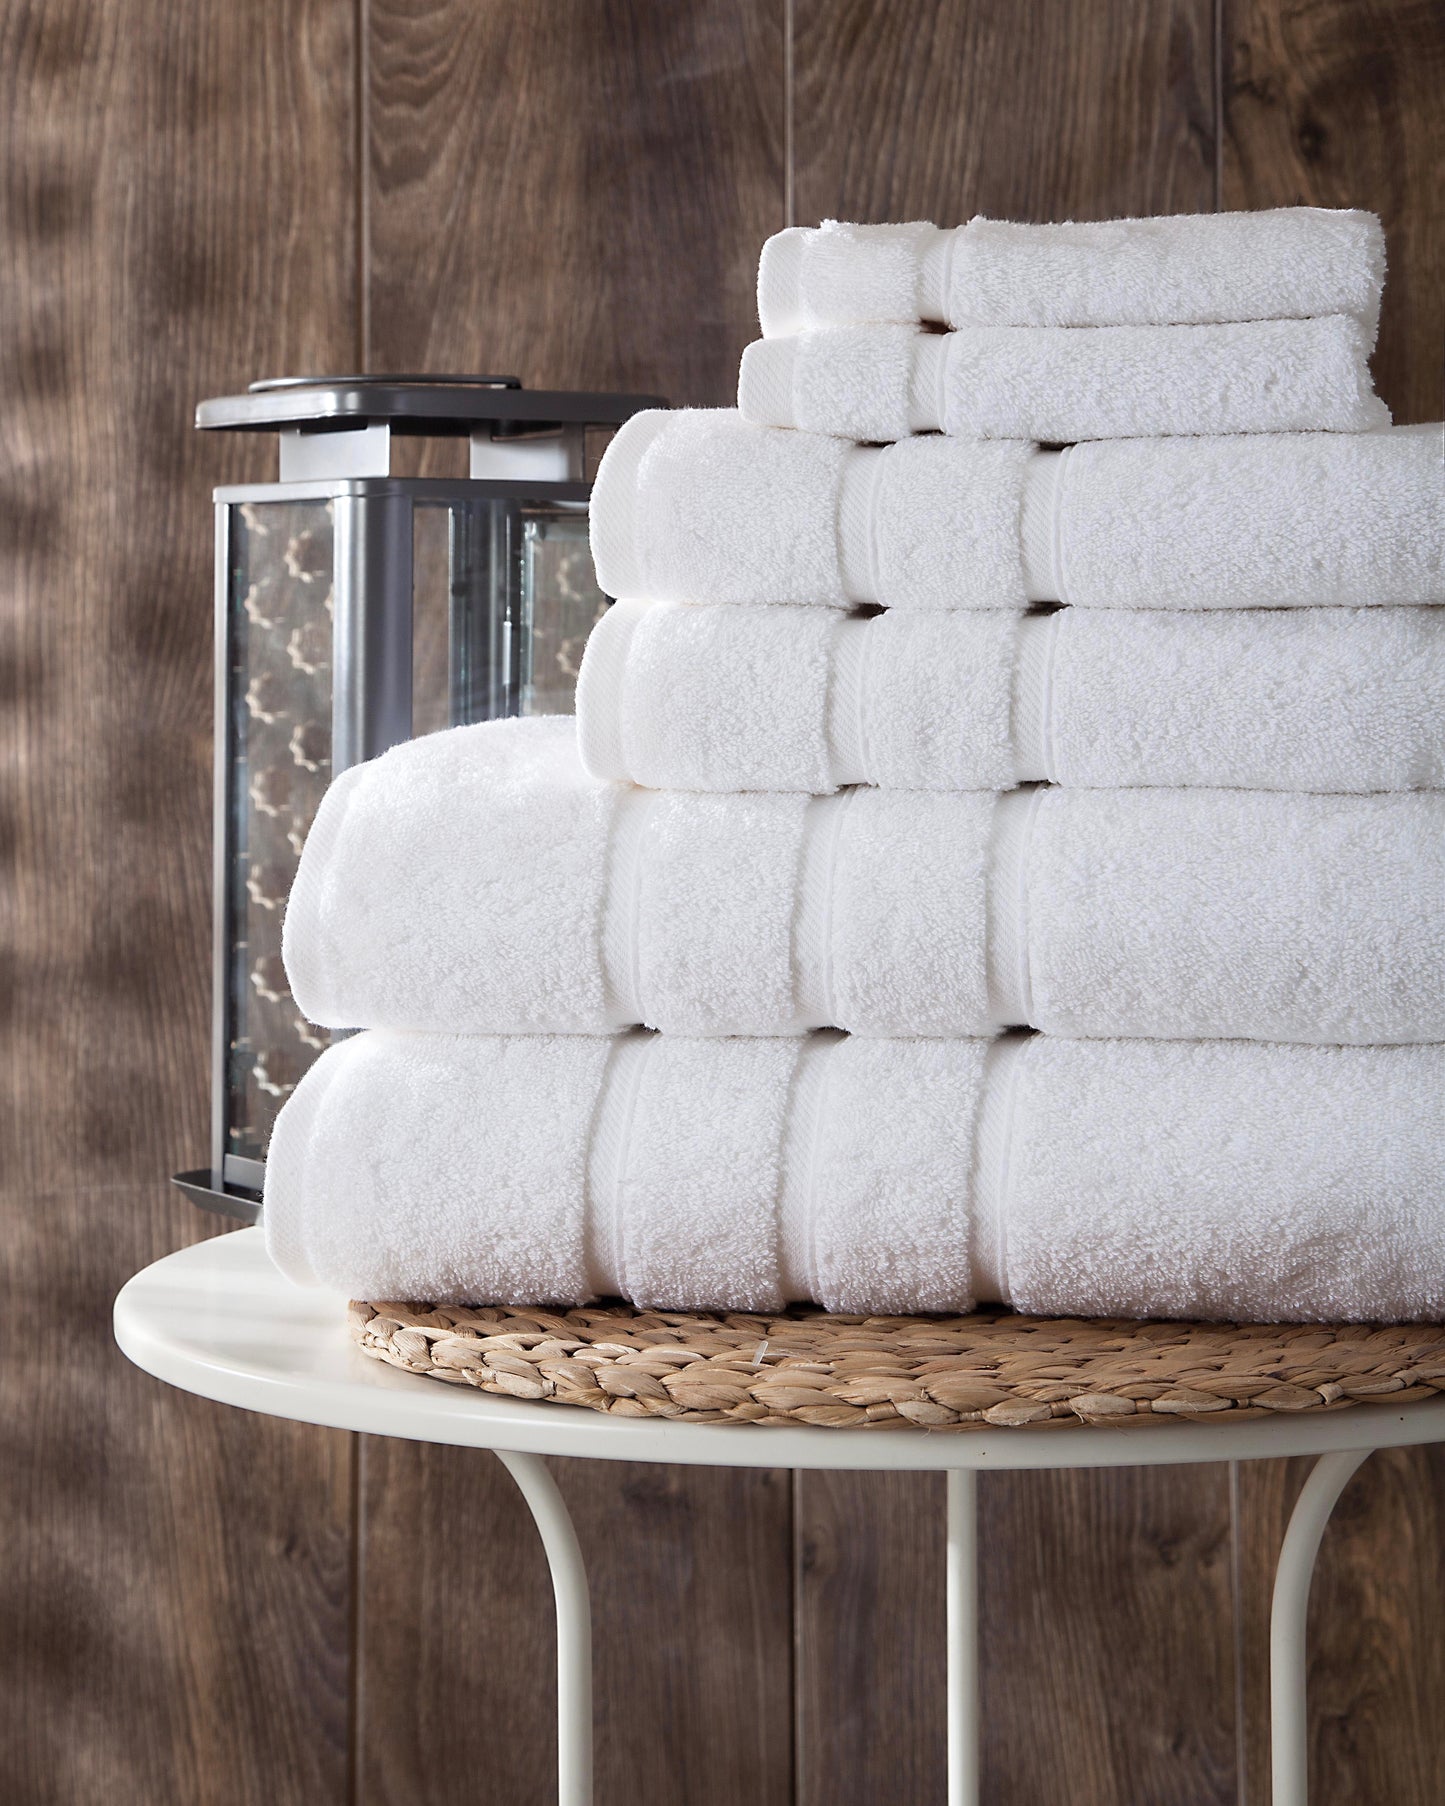 UpThrone Luxury Turkish Cotton White Bath Towels Set of 6